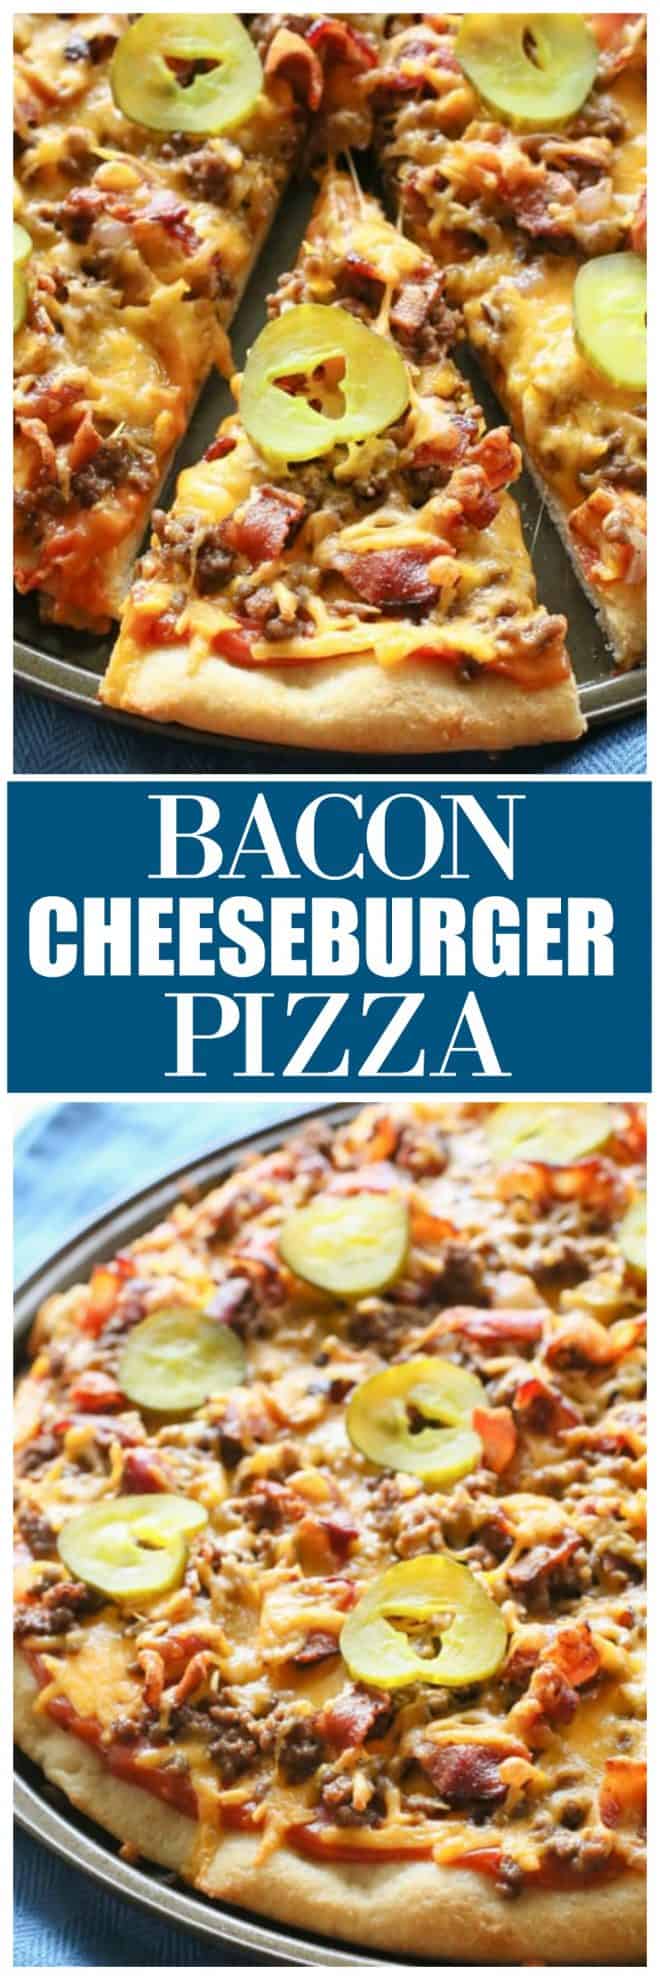 fb image - Bacon Cheeseburger Pizza